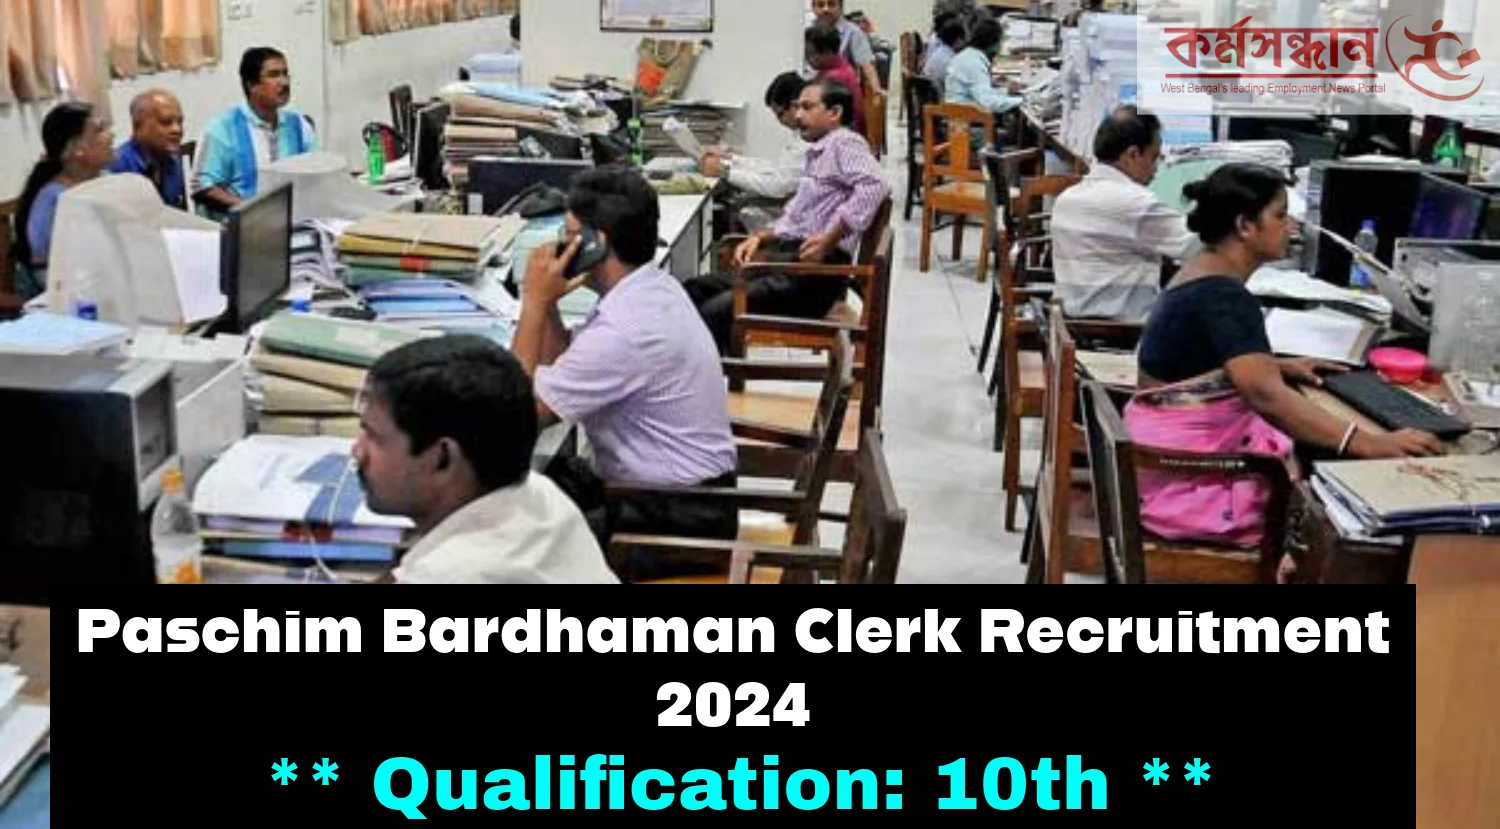 Paschim Bardhaman Clerk Recruitment 2024, Check Details Now